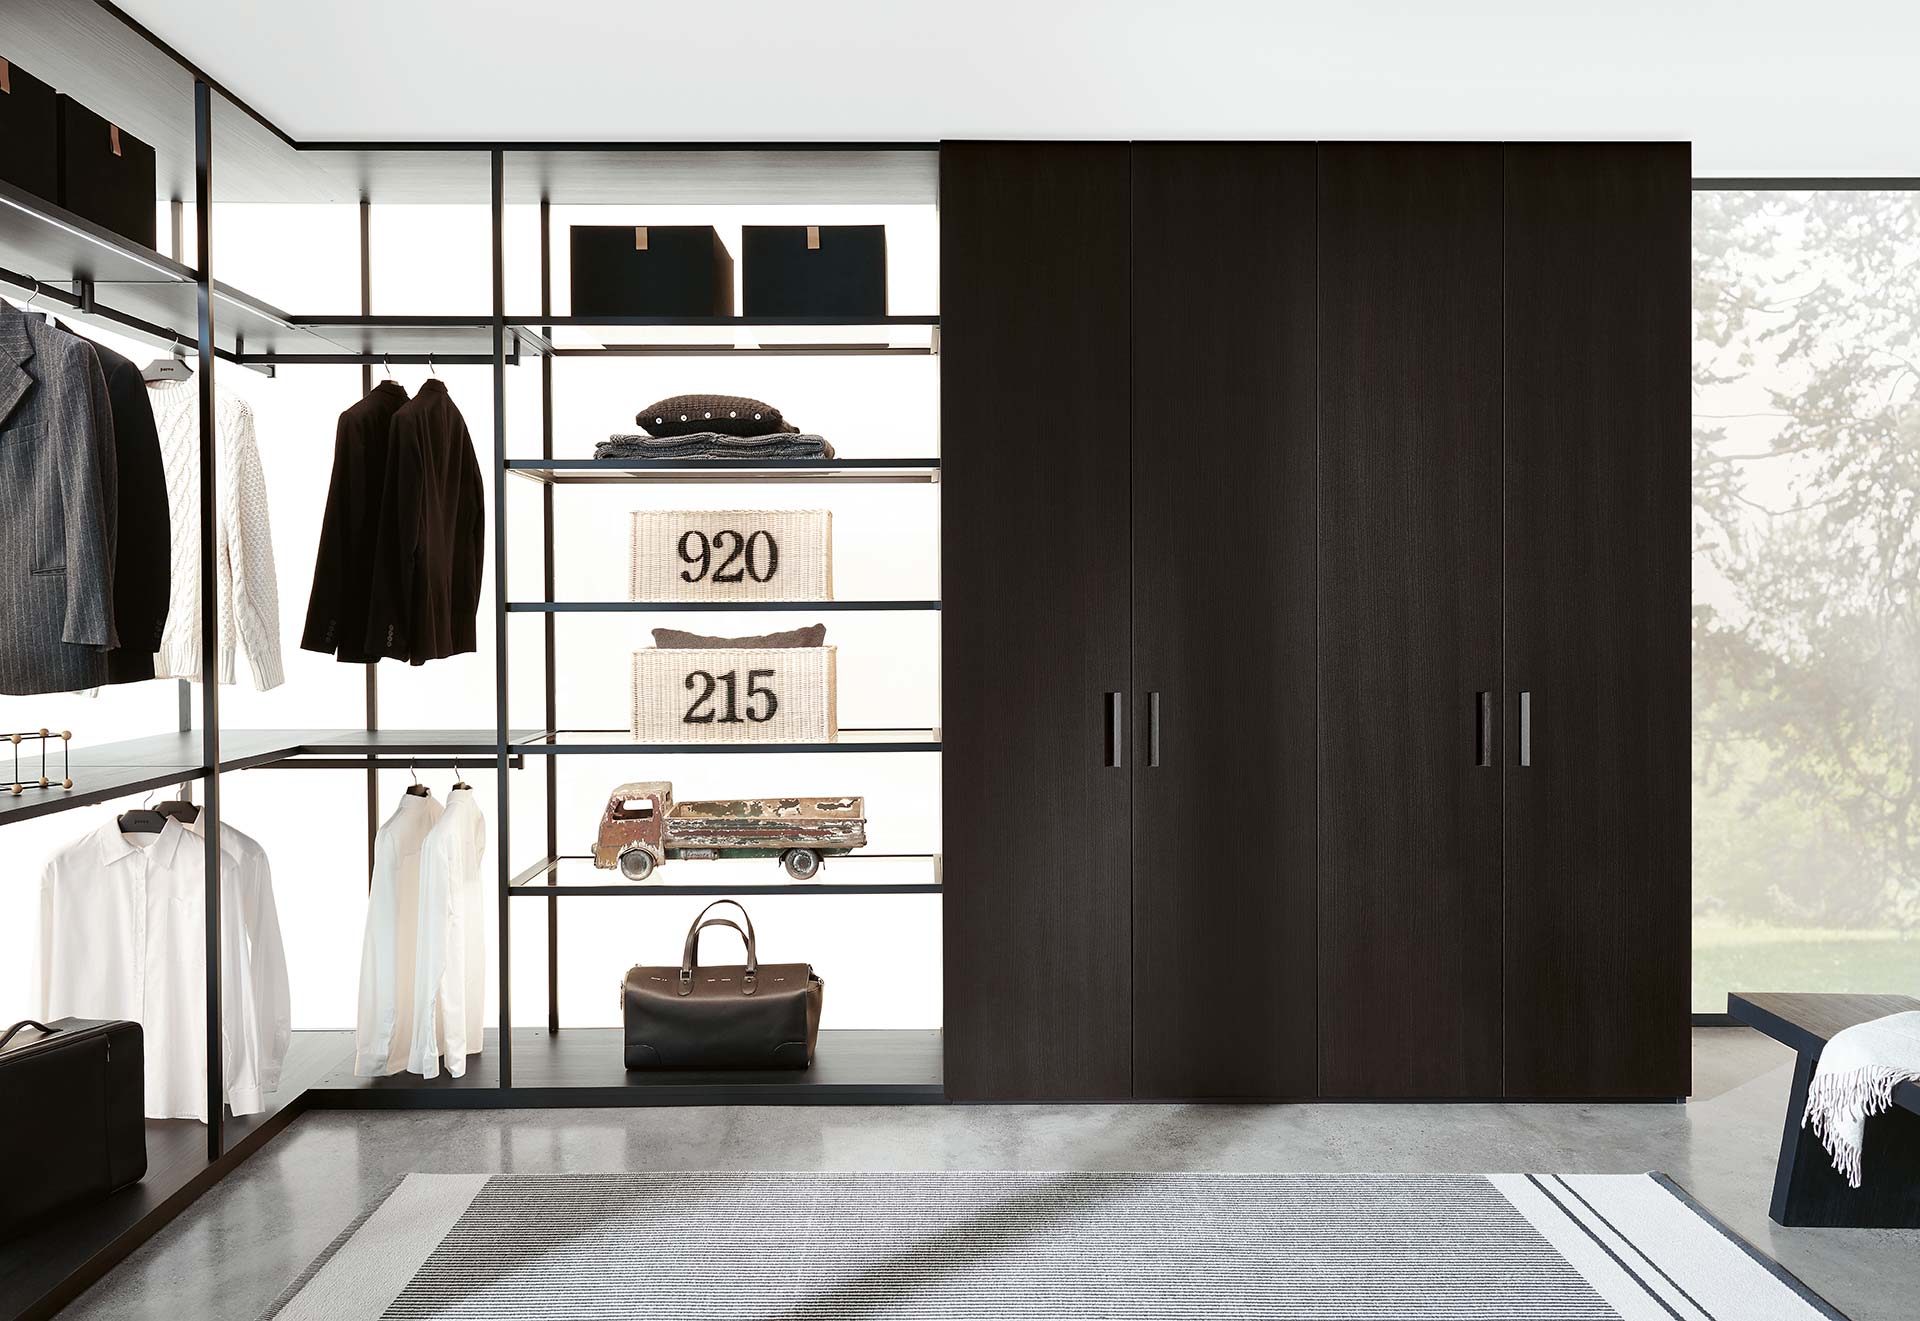 Italian designer Piero Lissoni’s dressing storage